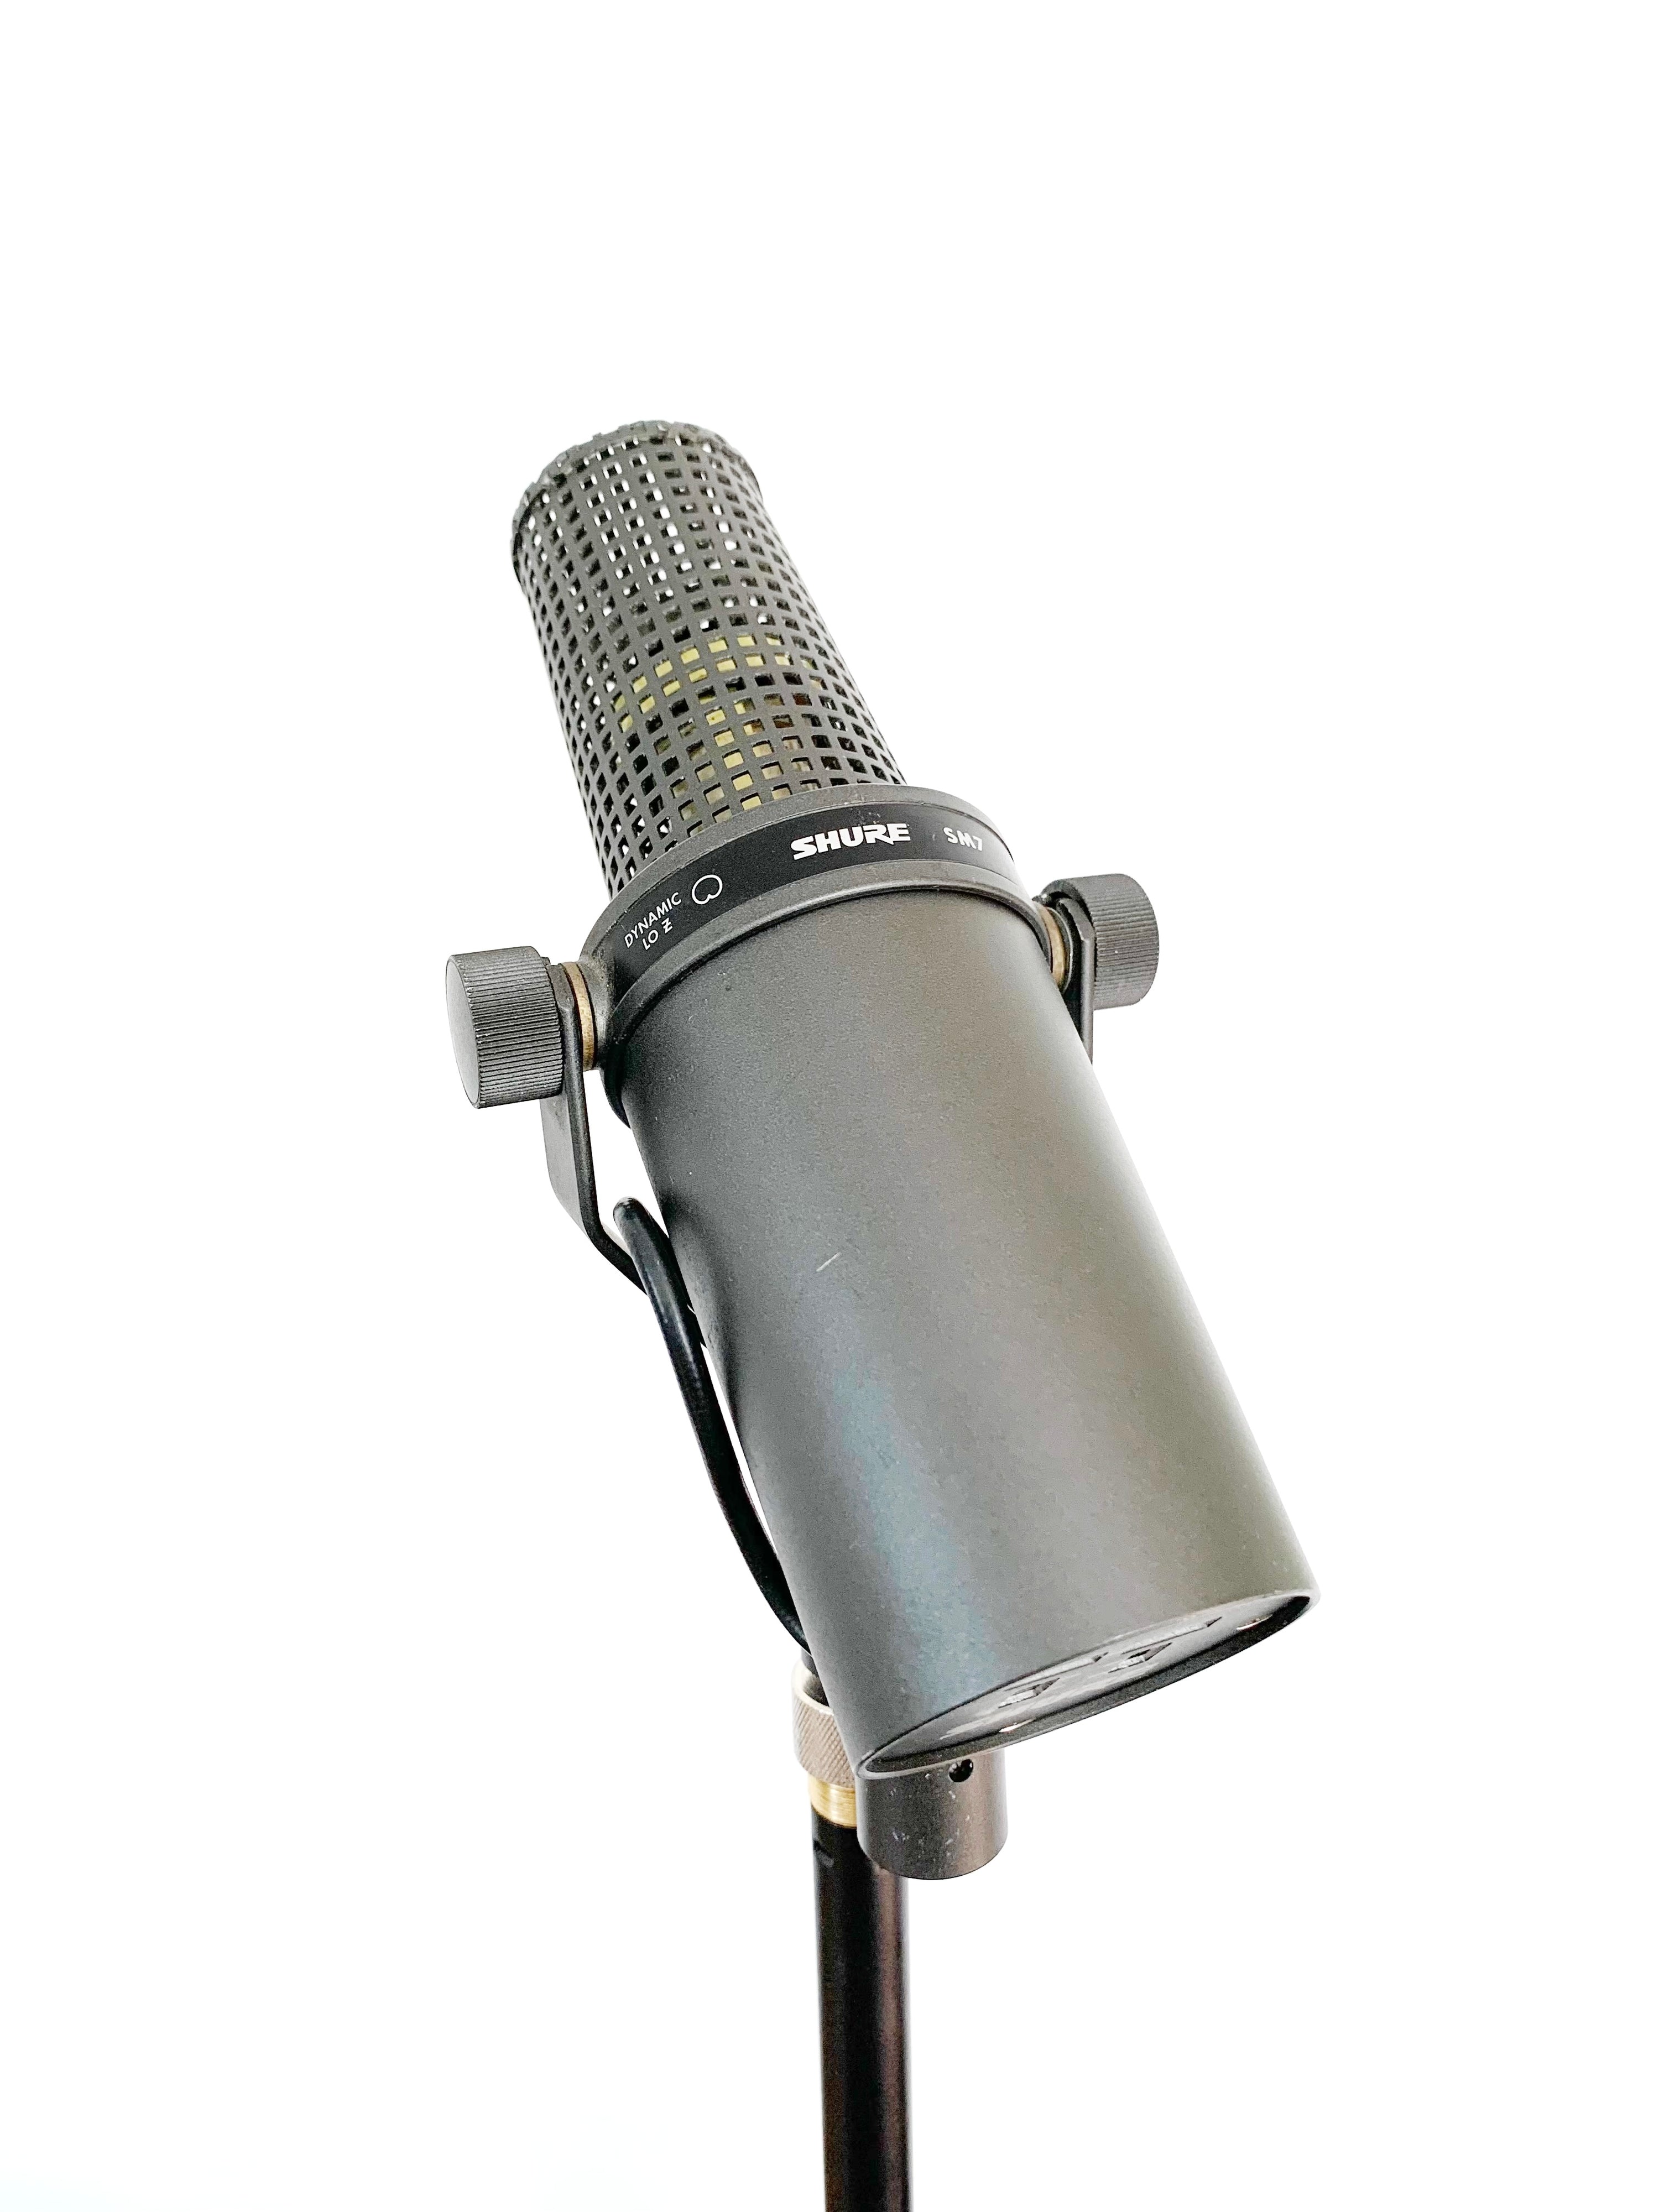 Shure SM7 Dynamic Microphone